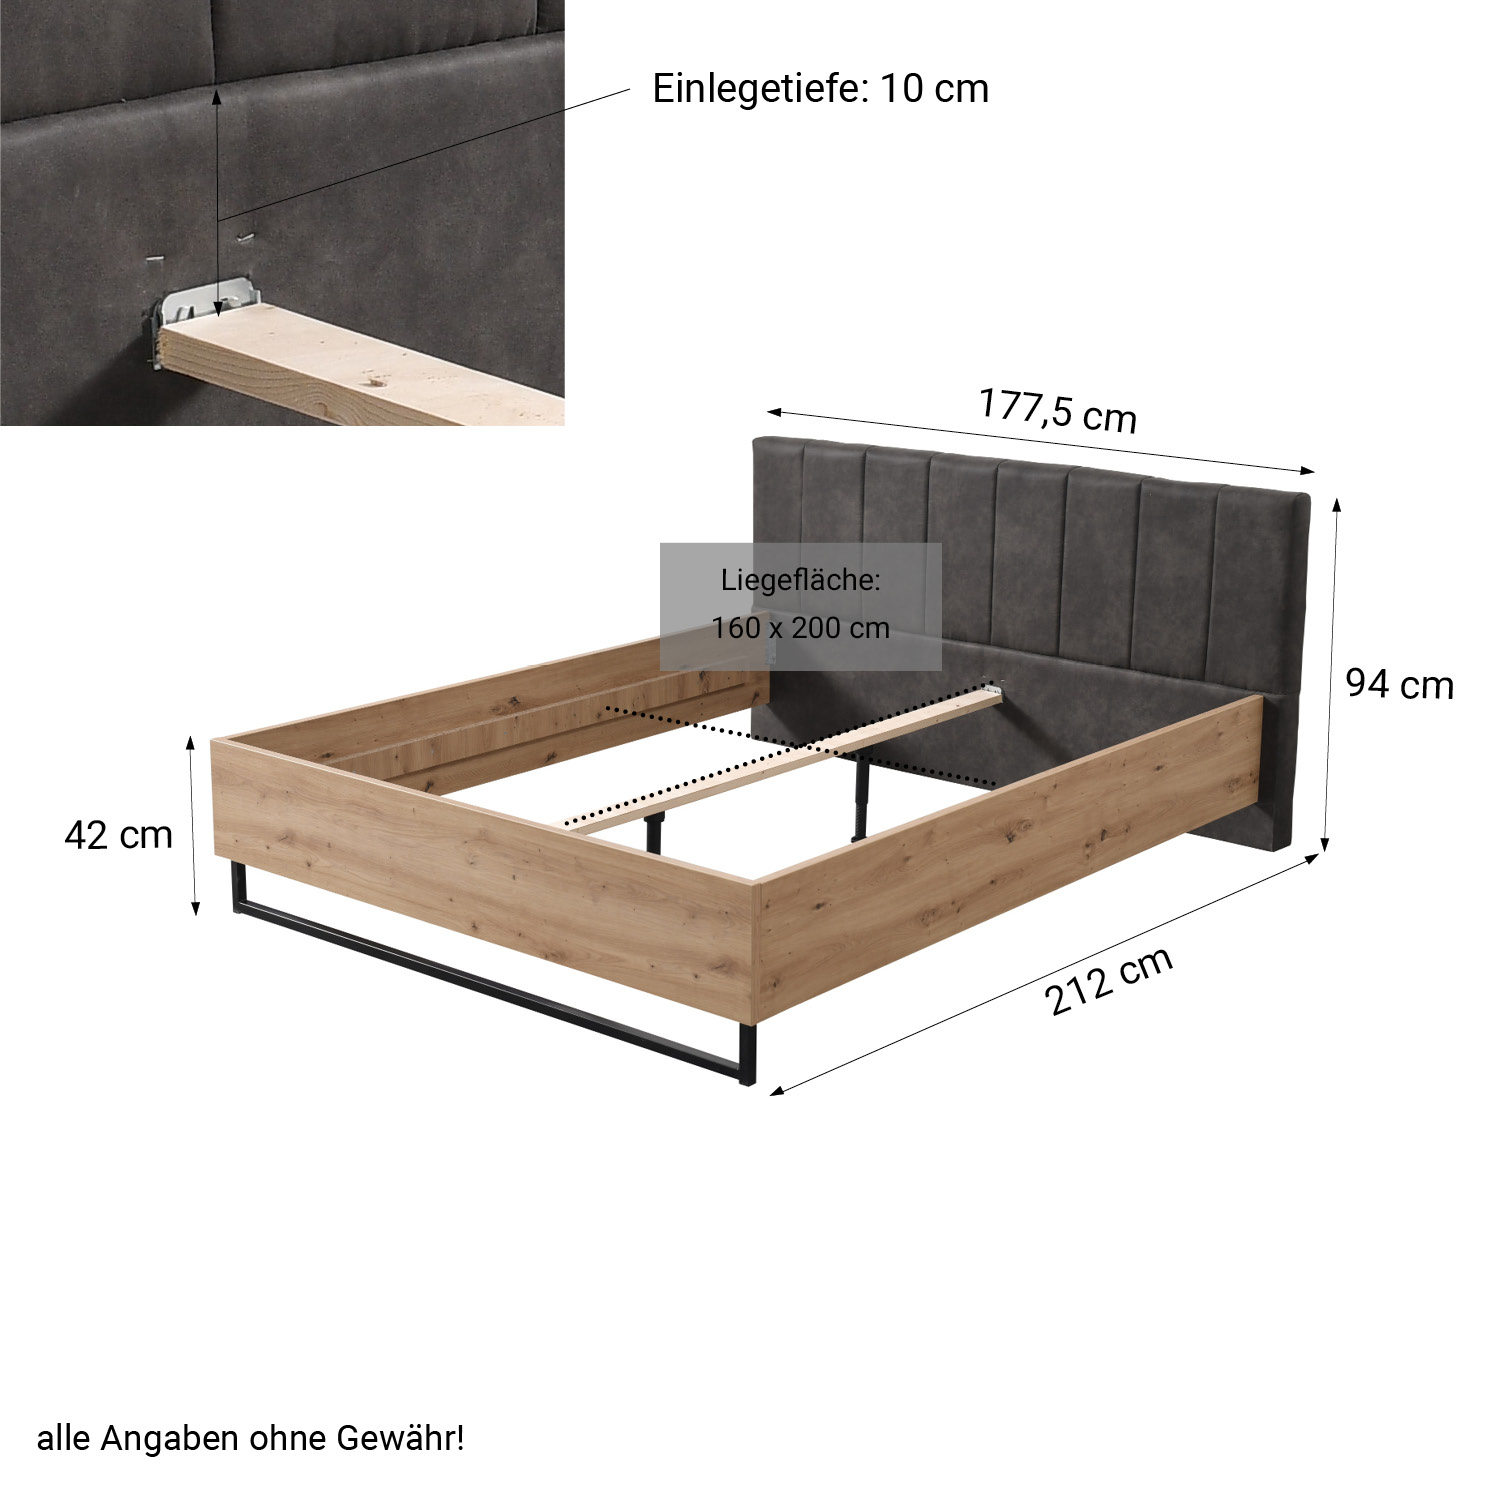 Doppelbett Holzbett 160x200 cm Polsterbett  Bett Lattenrost Eiche Stoff Grau Industrial Style